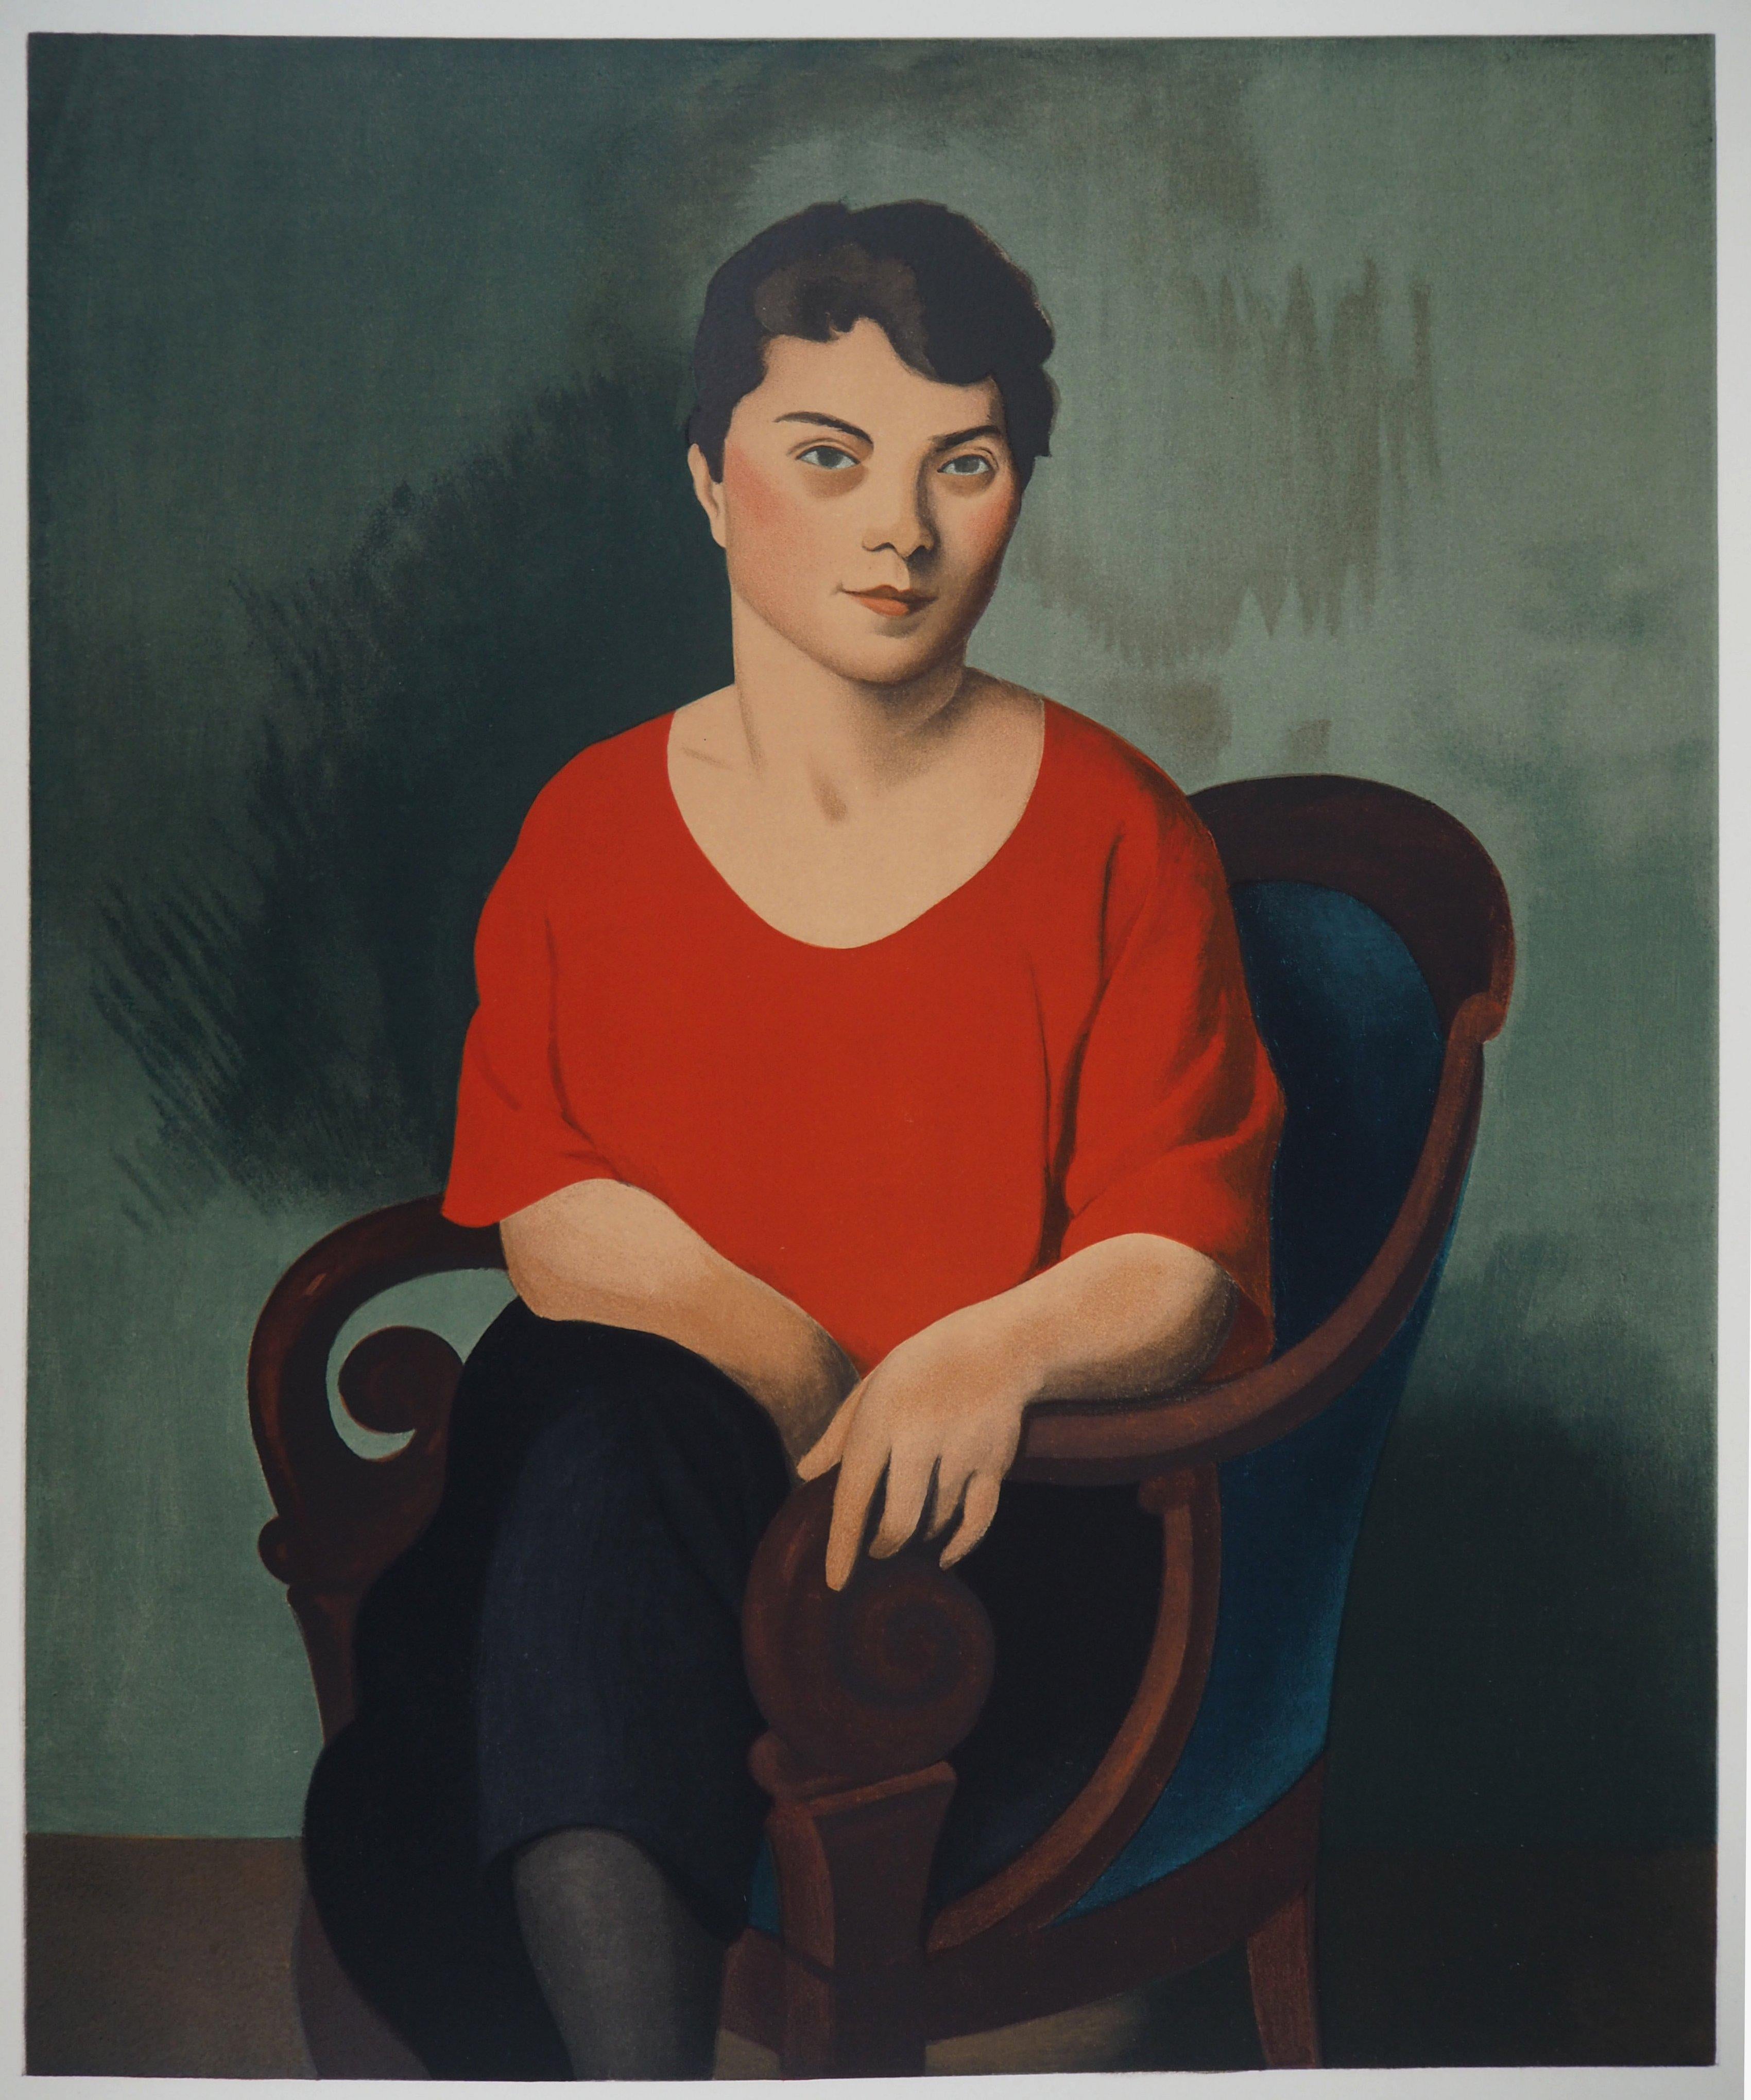 Roger de la Fresnaye Portrait Print - Woman with Red Pullover - Lithograph, Mourlot